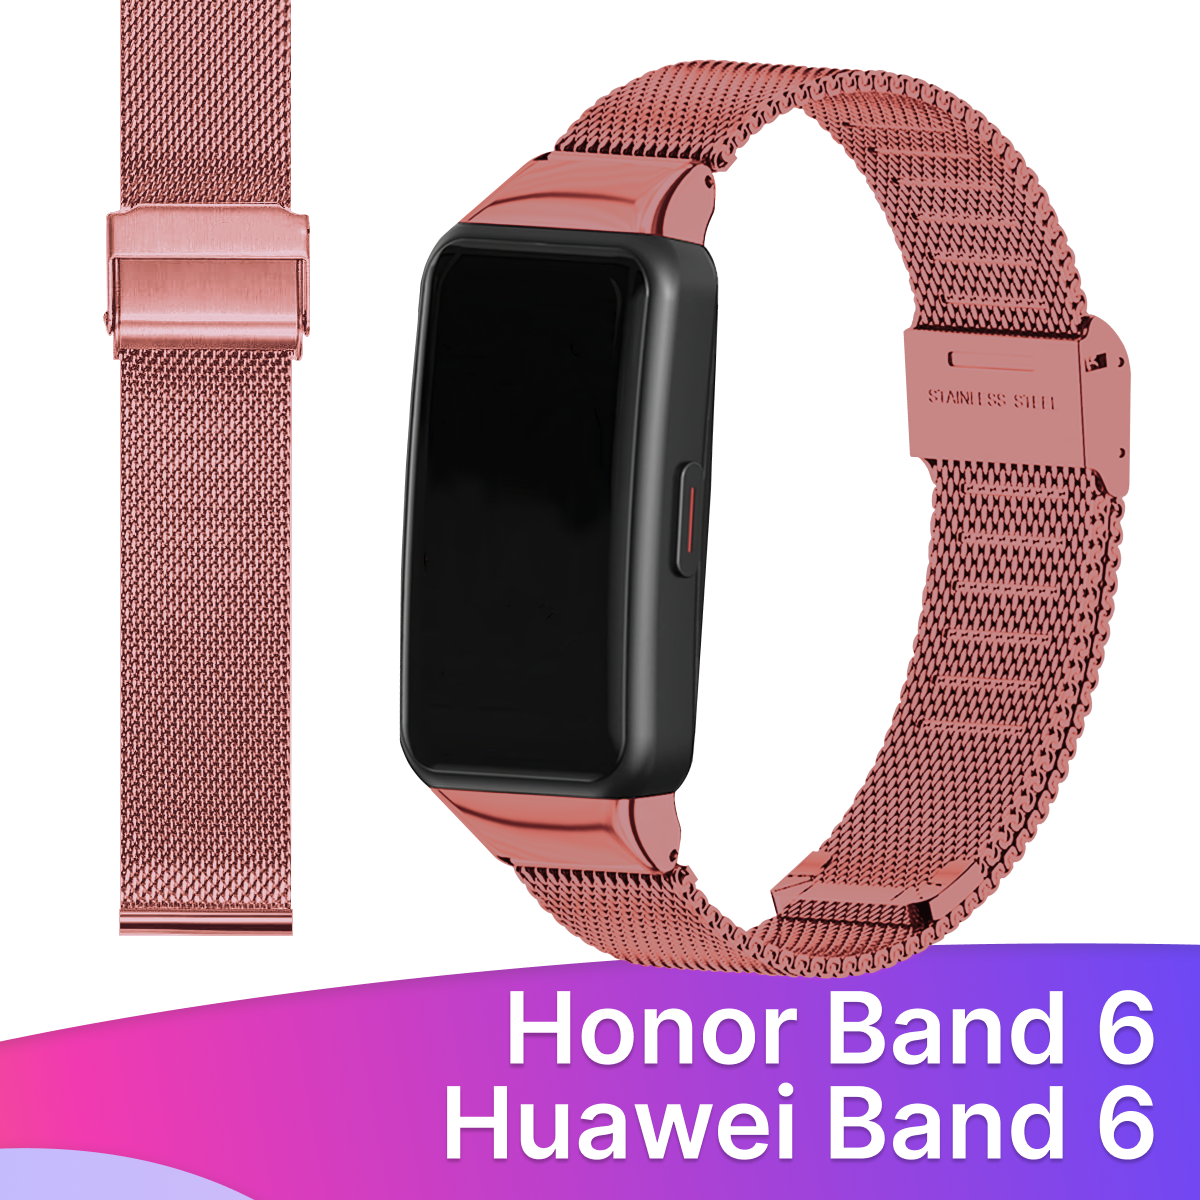 Металлический ремешок для фитнес-браслета Honor Band 6 и Huawei Band 6 / Браслет миланская петля на смарт часы Хонор и Хуавей Бэнд 6 / Розовый